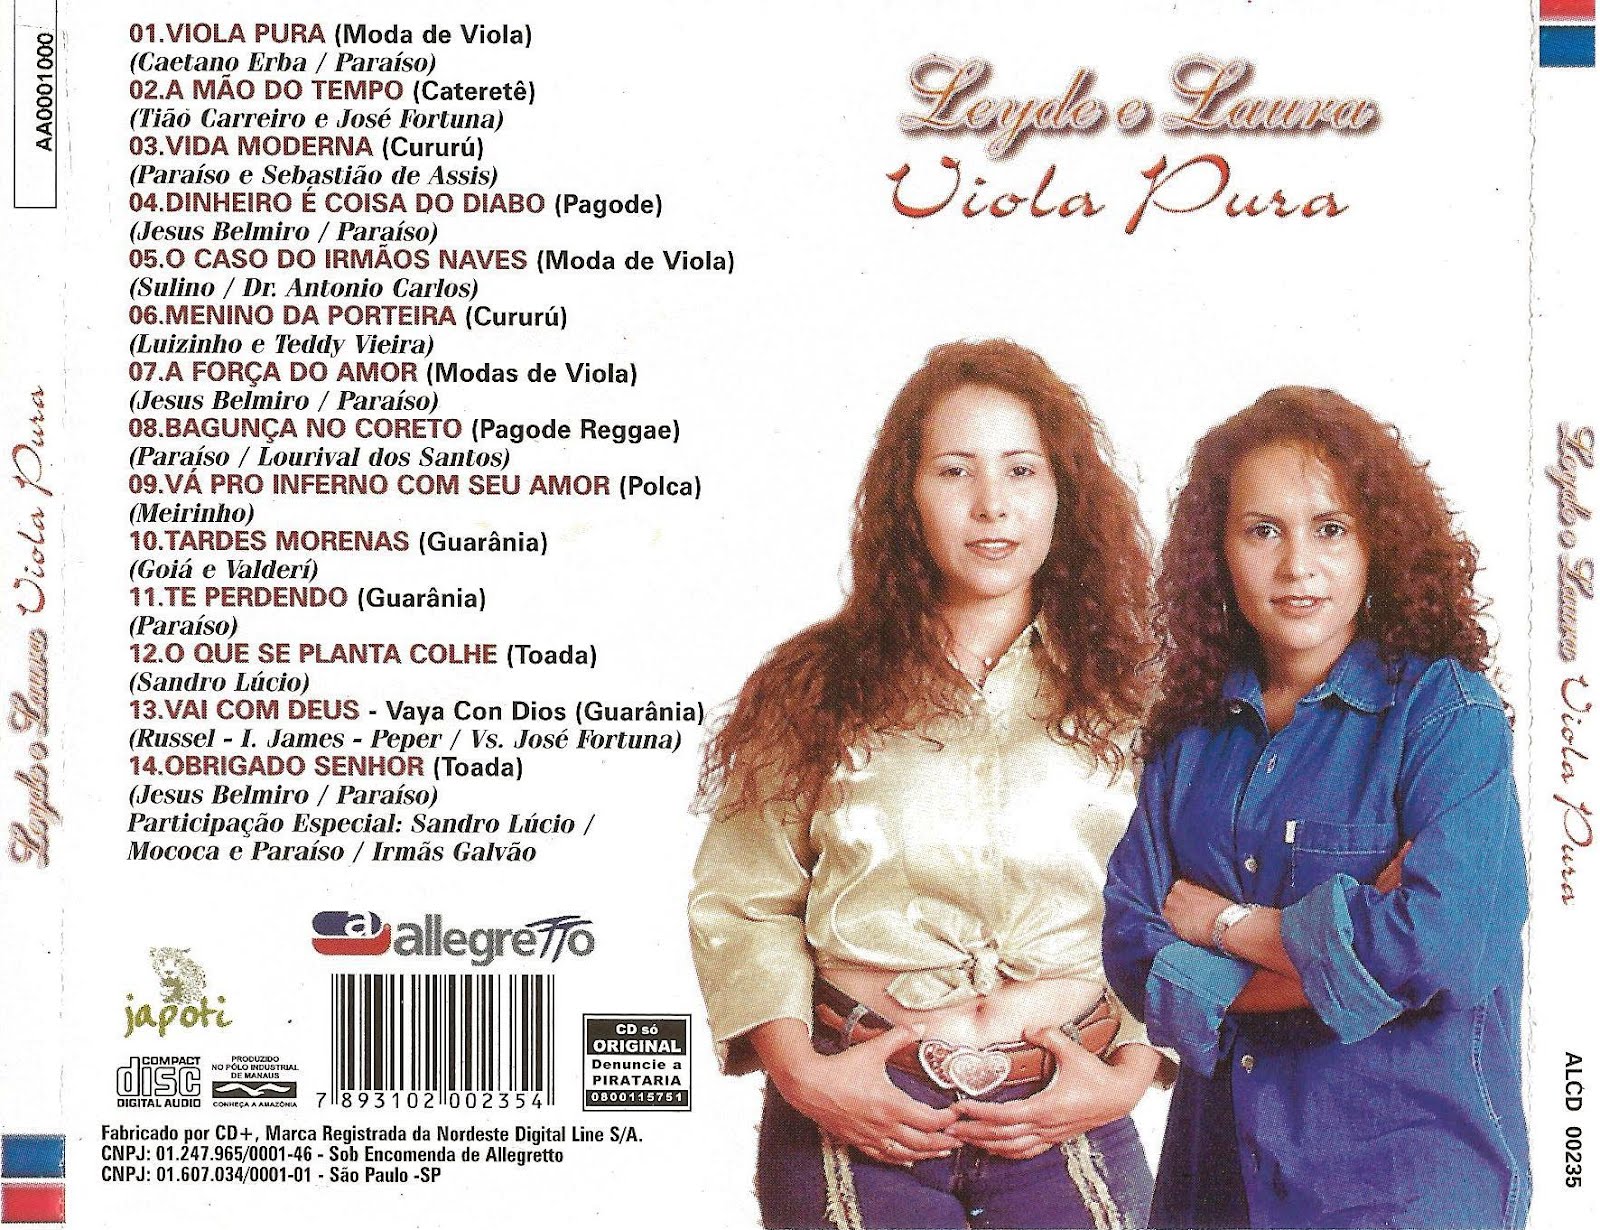 Leyde e Laura Viola Pura 001 (1)